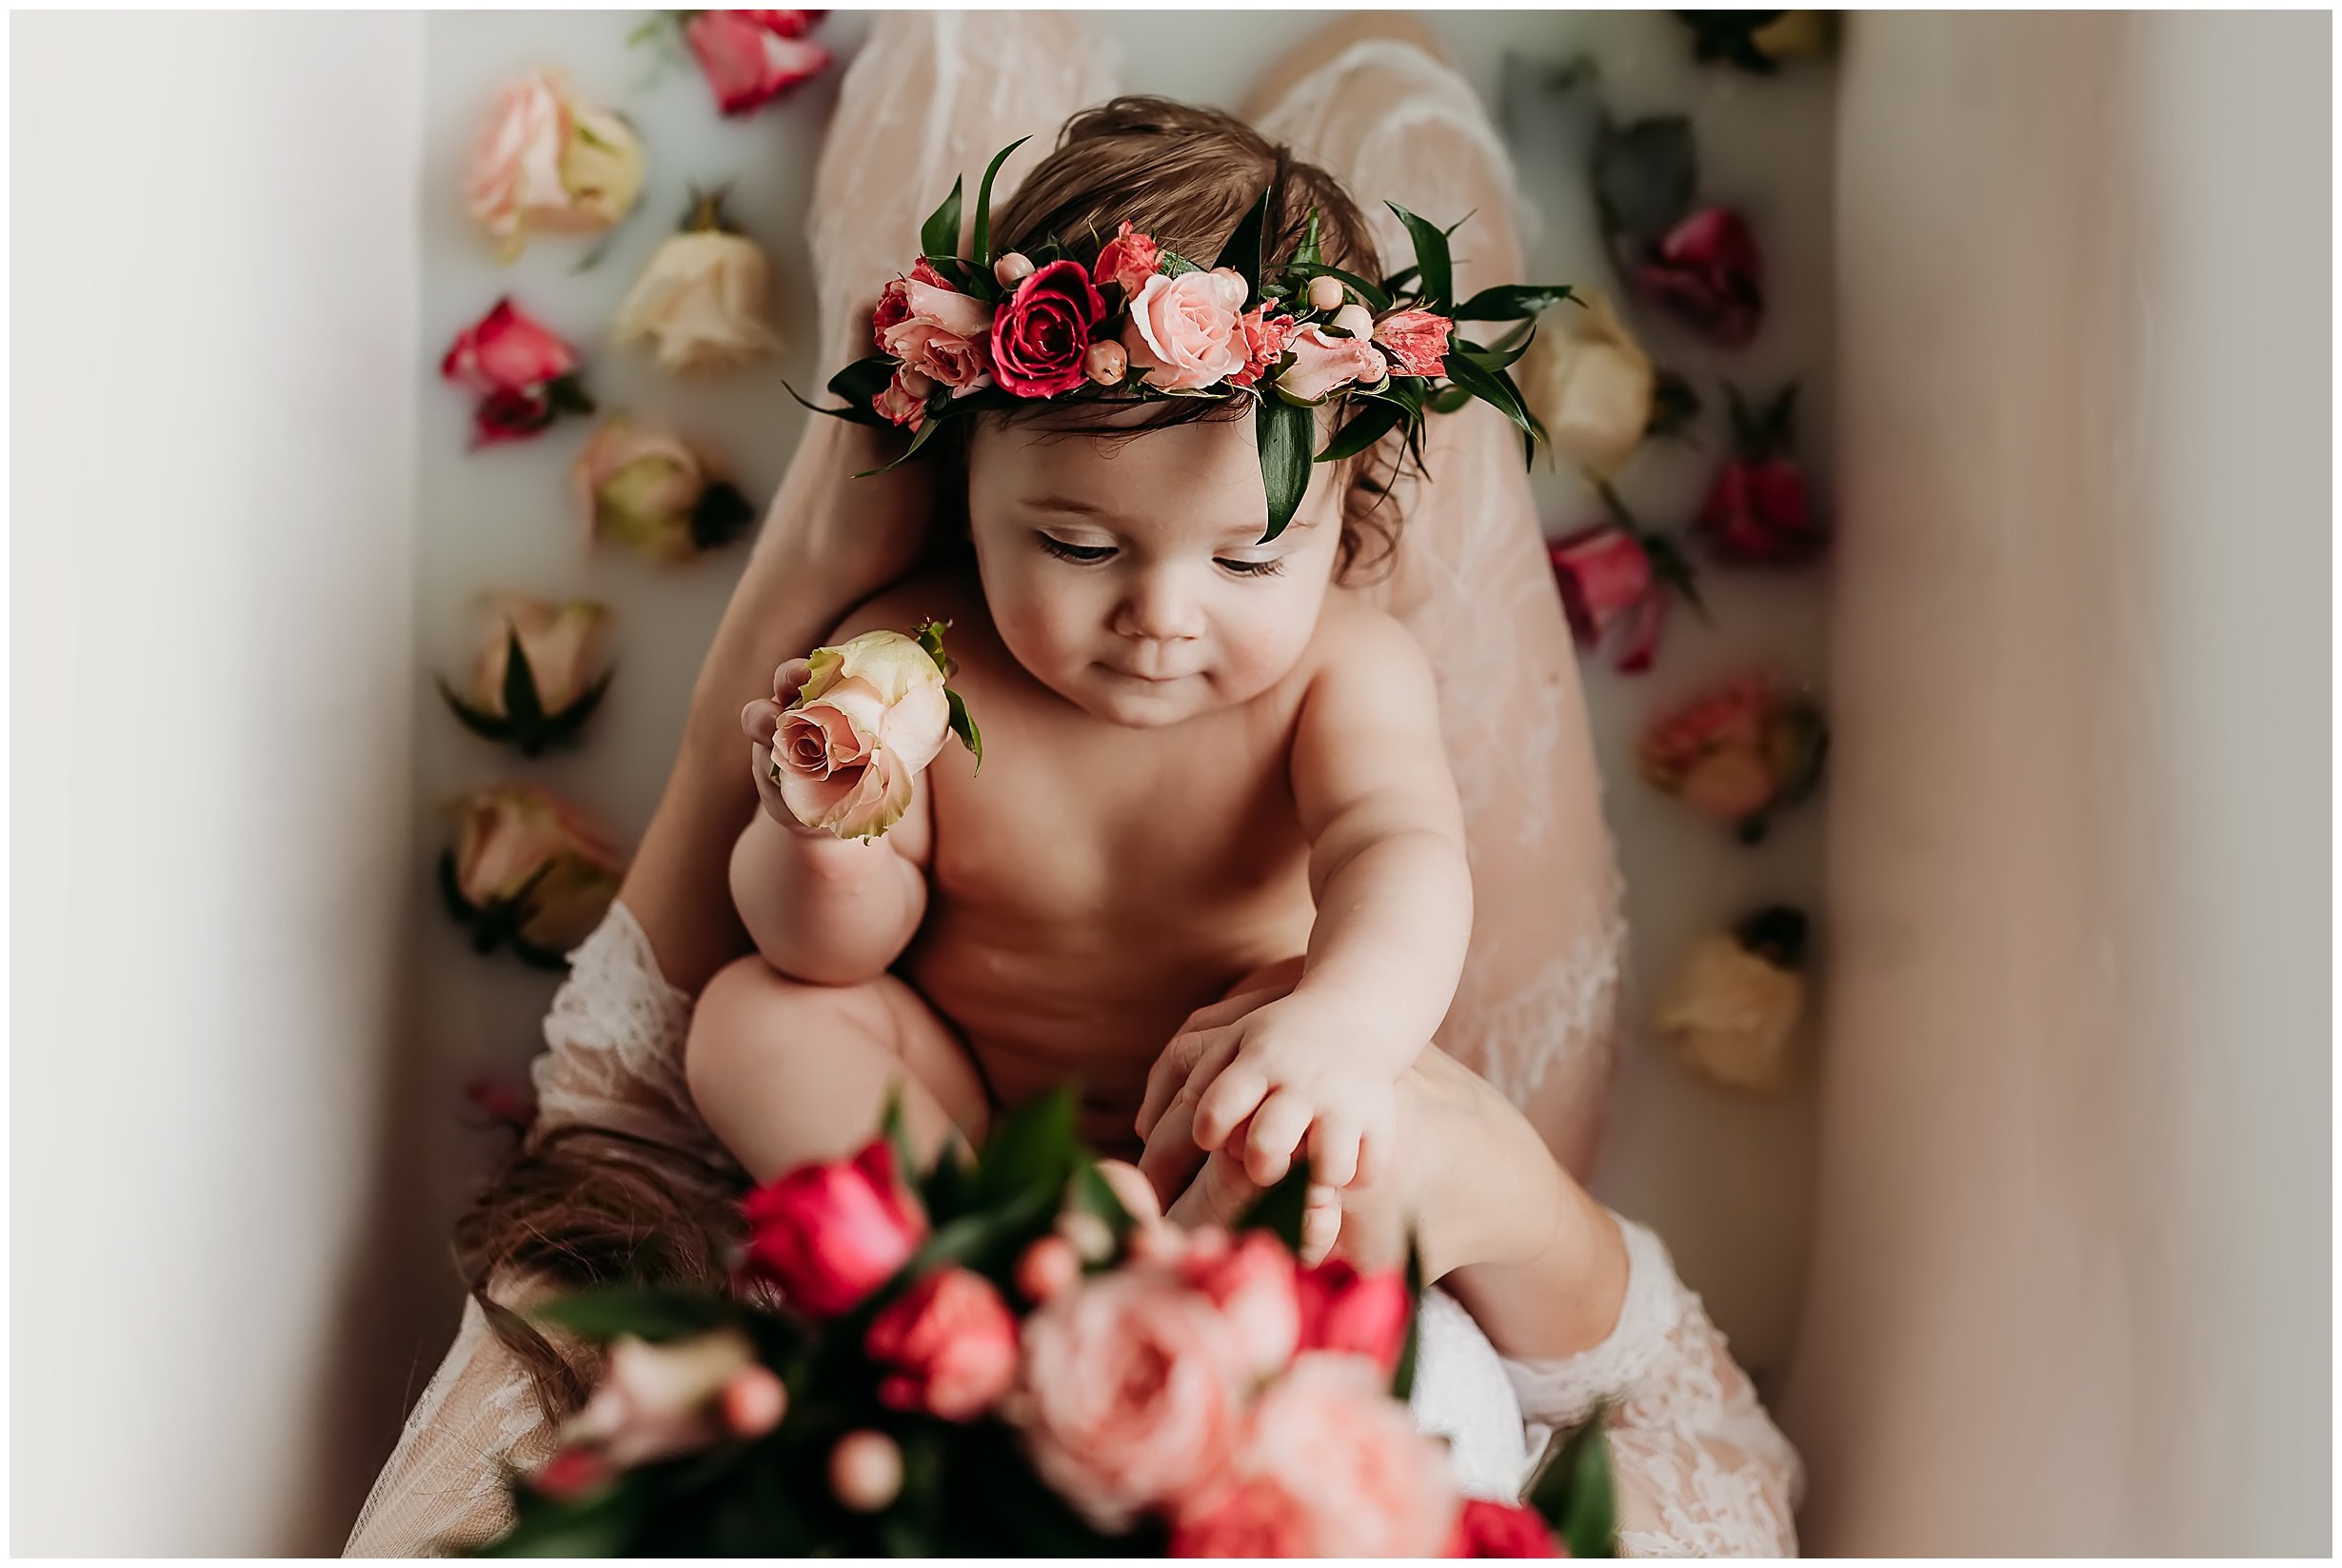 Infant in milk bath with flower crown